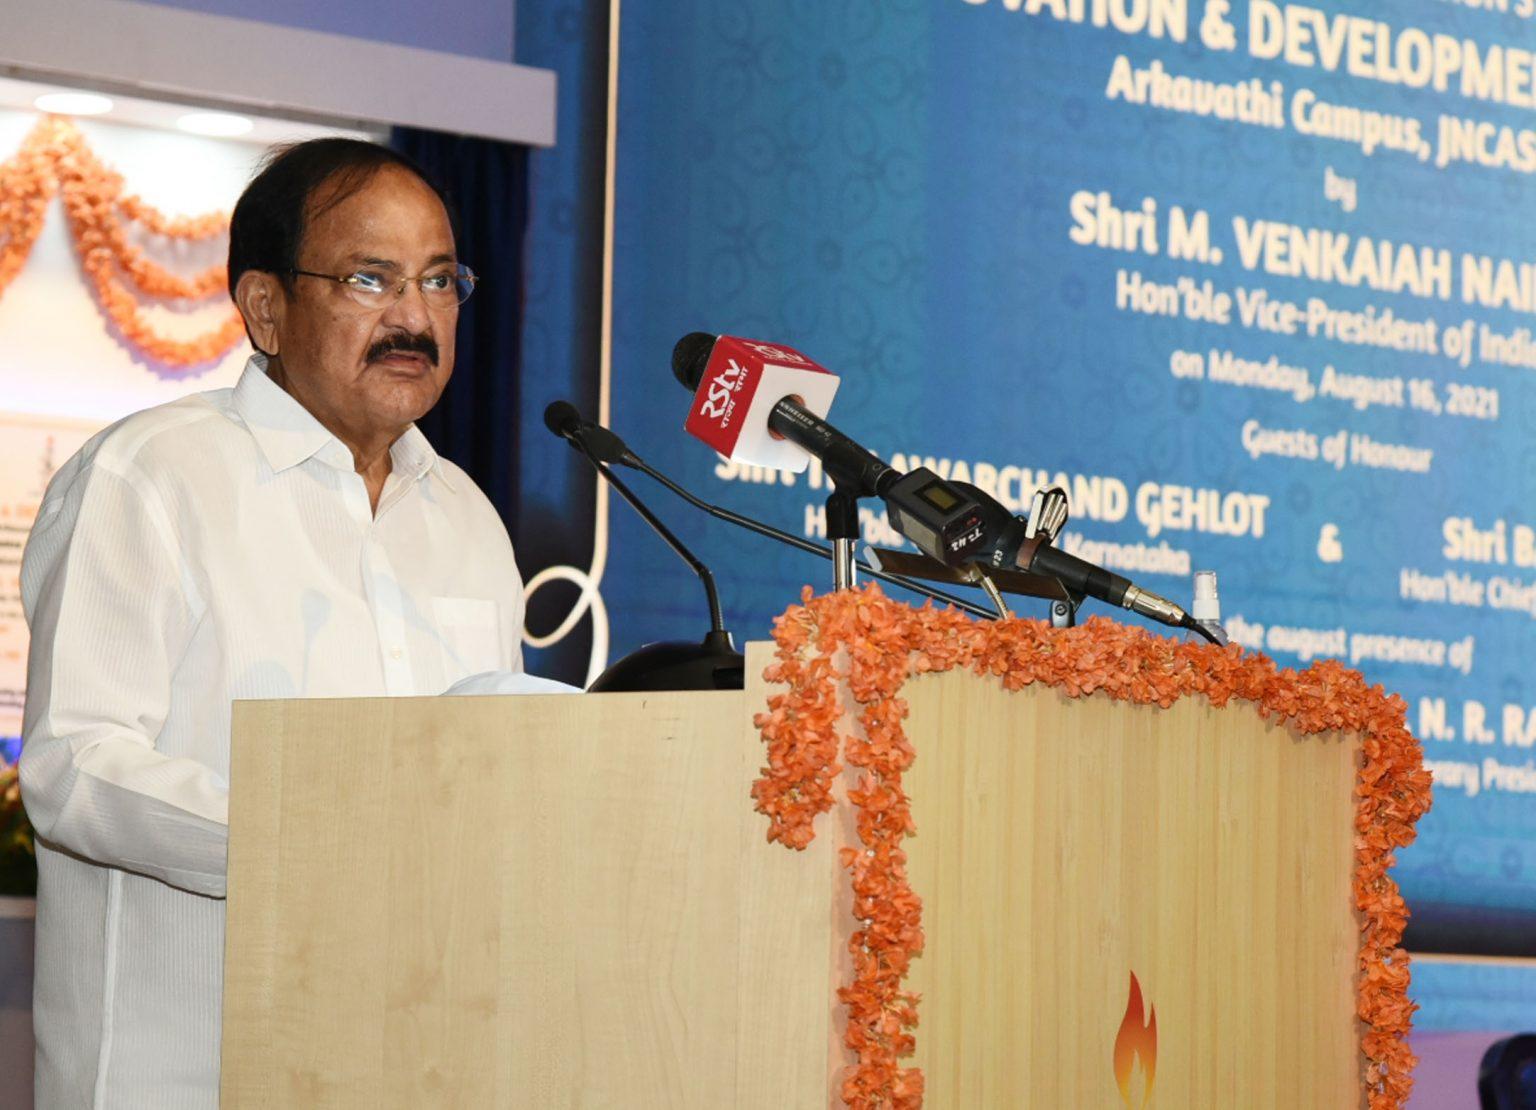 Venkaiah Naidu laid foundation stone of Innovation and Development Centre |_30.1